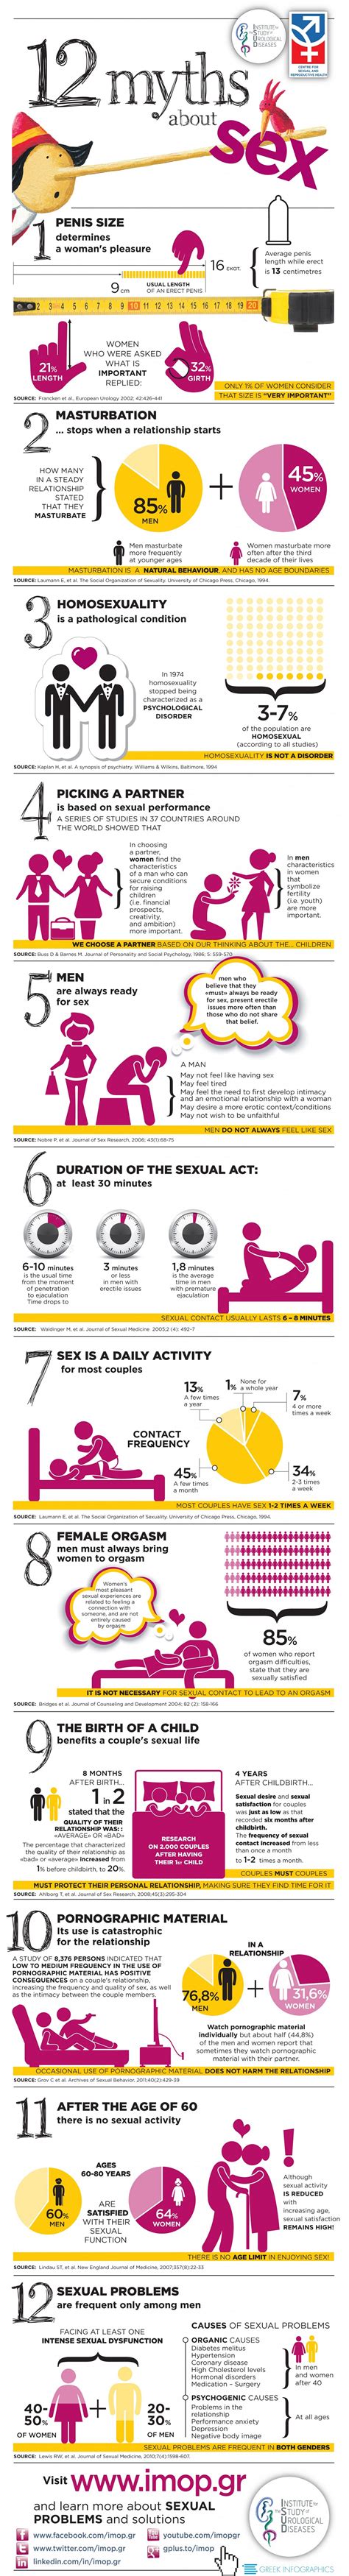 12 Lies About Having Intercourse